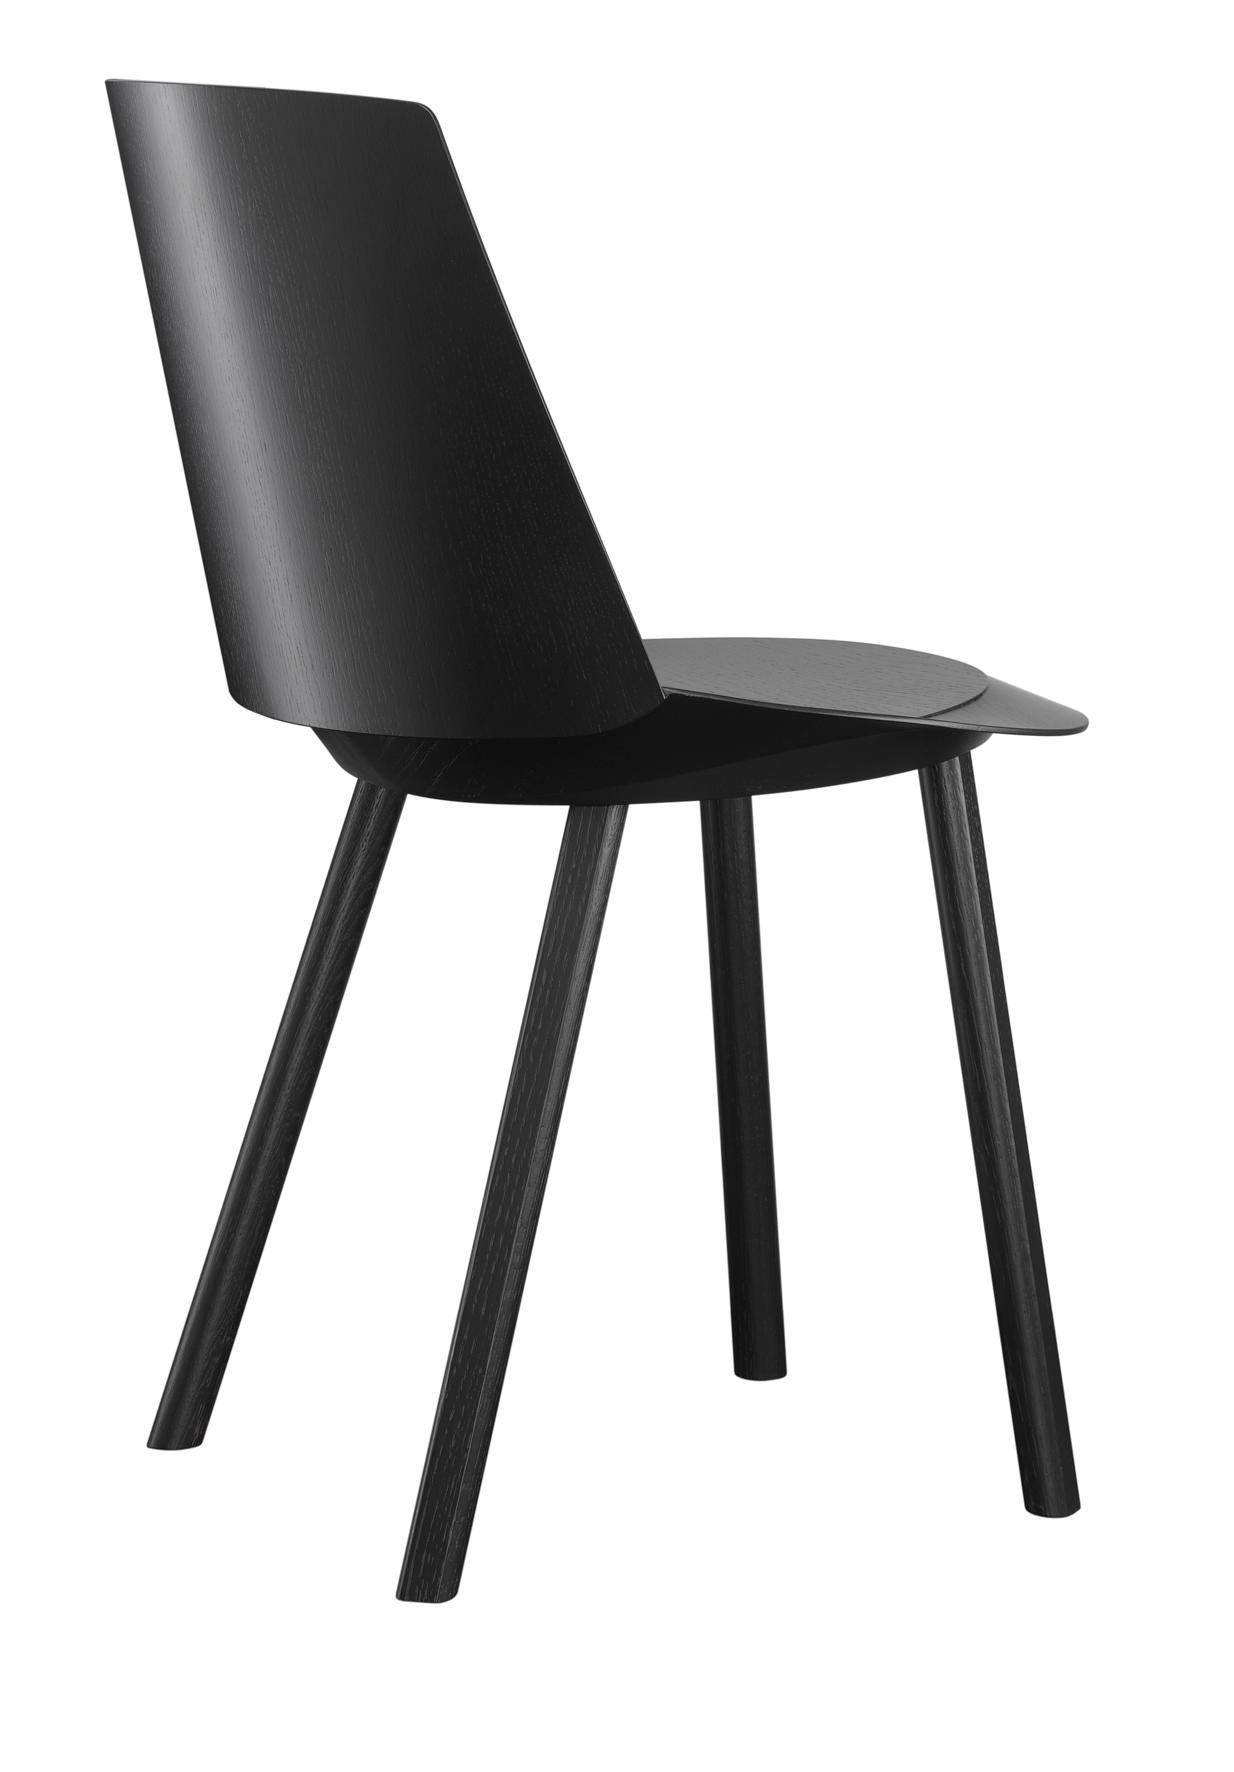 For Sale: Black (Jet Black Lacquer) e15 Houdini Side Chair by Stefan Diez